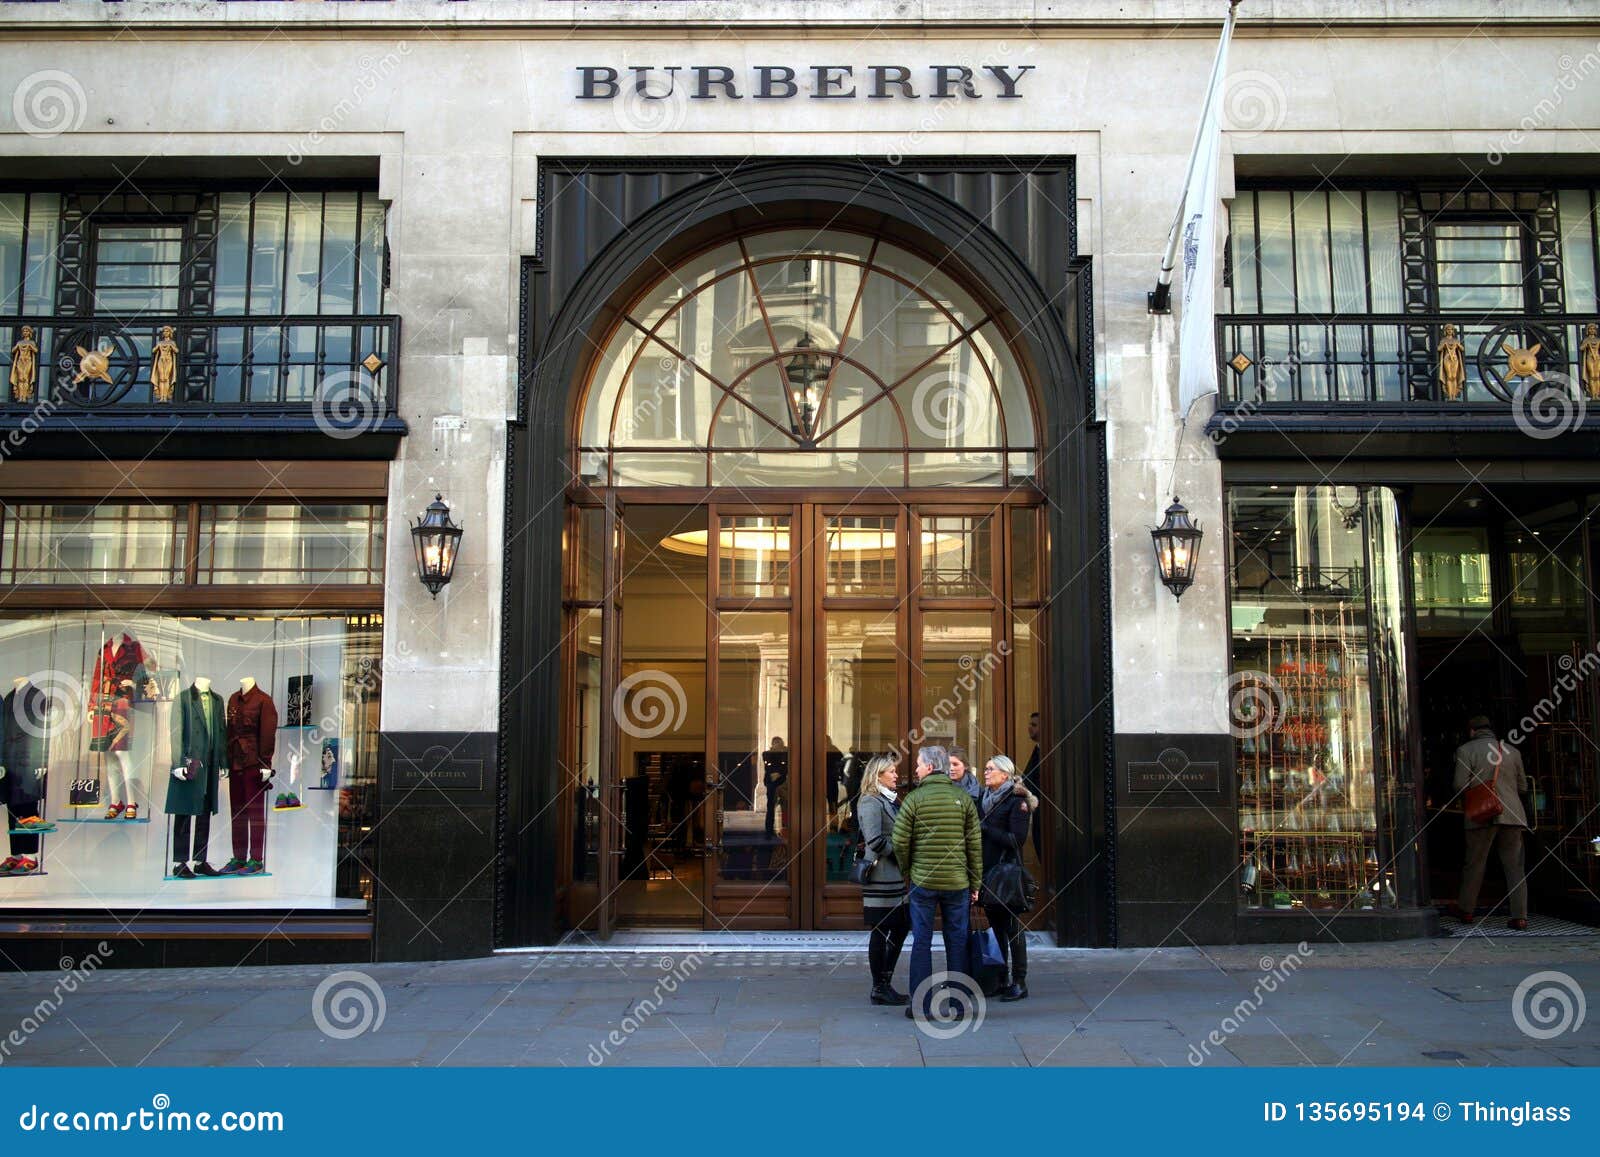 burberry showroom london